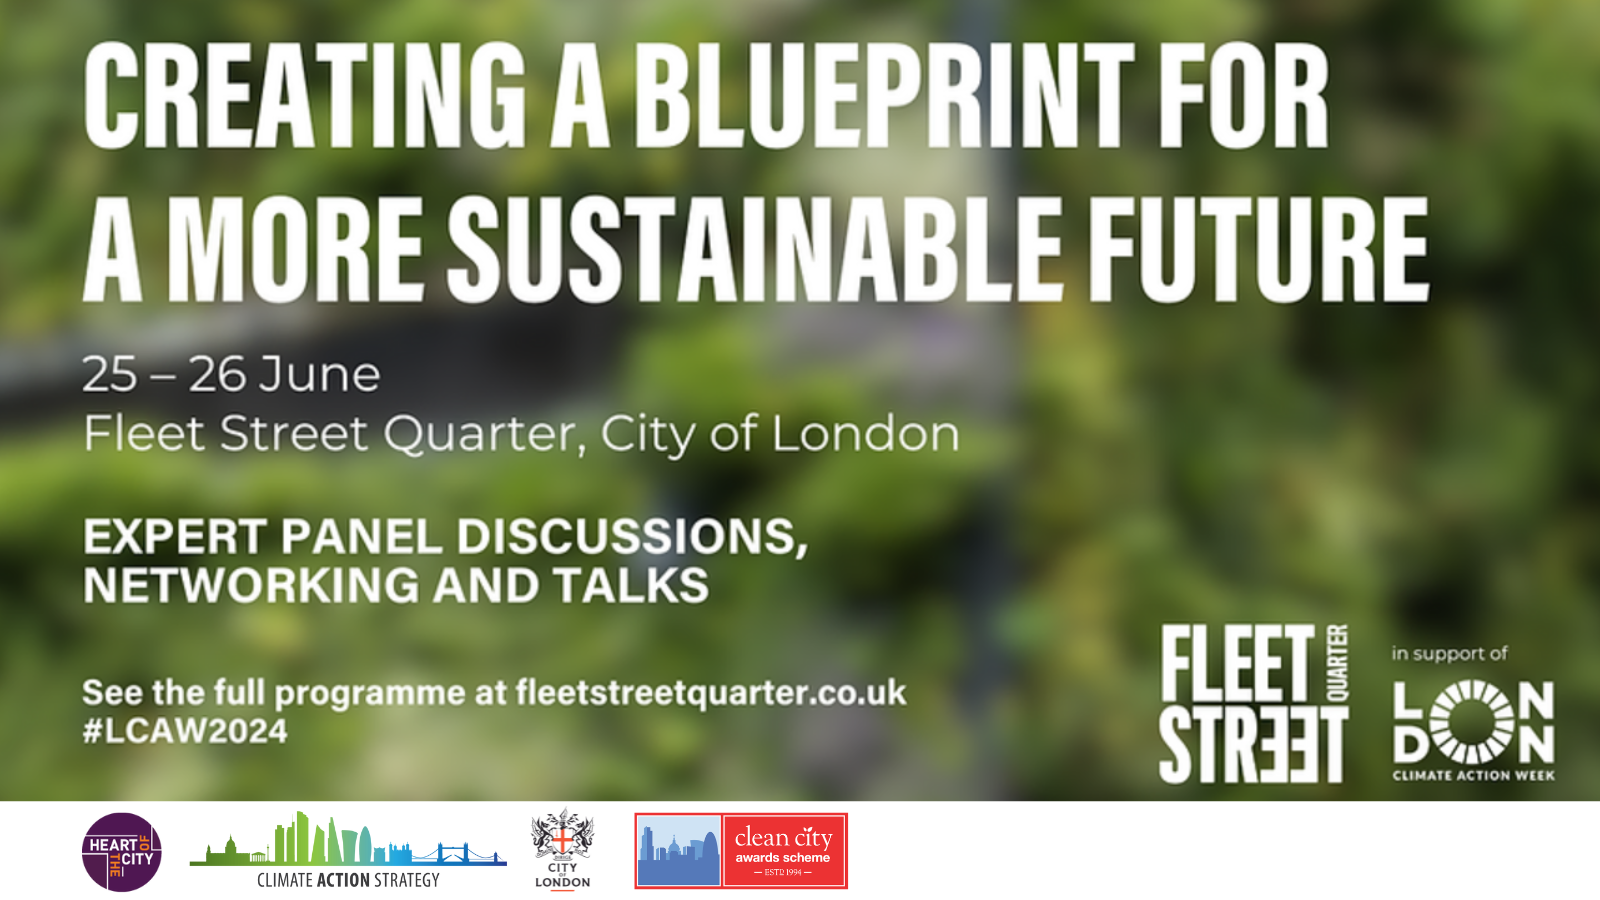 Heart of the City to join Fleet Street Quarter’s Climate Festival 2024